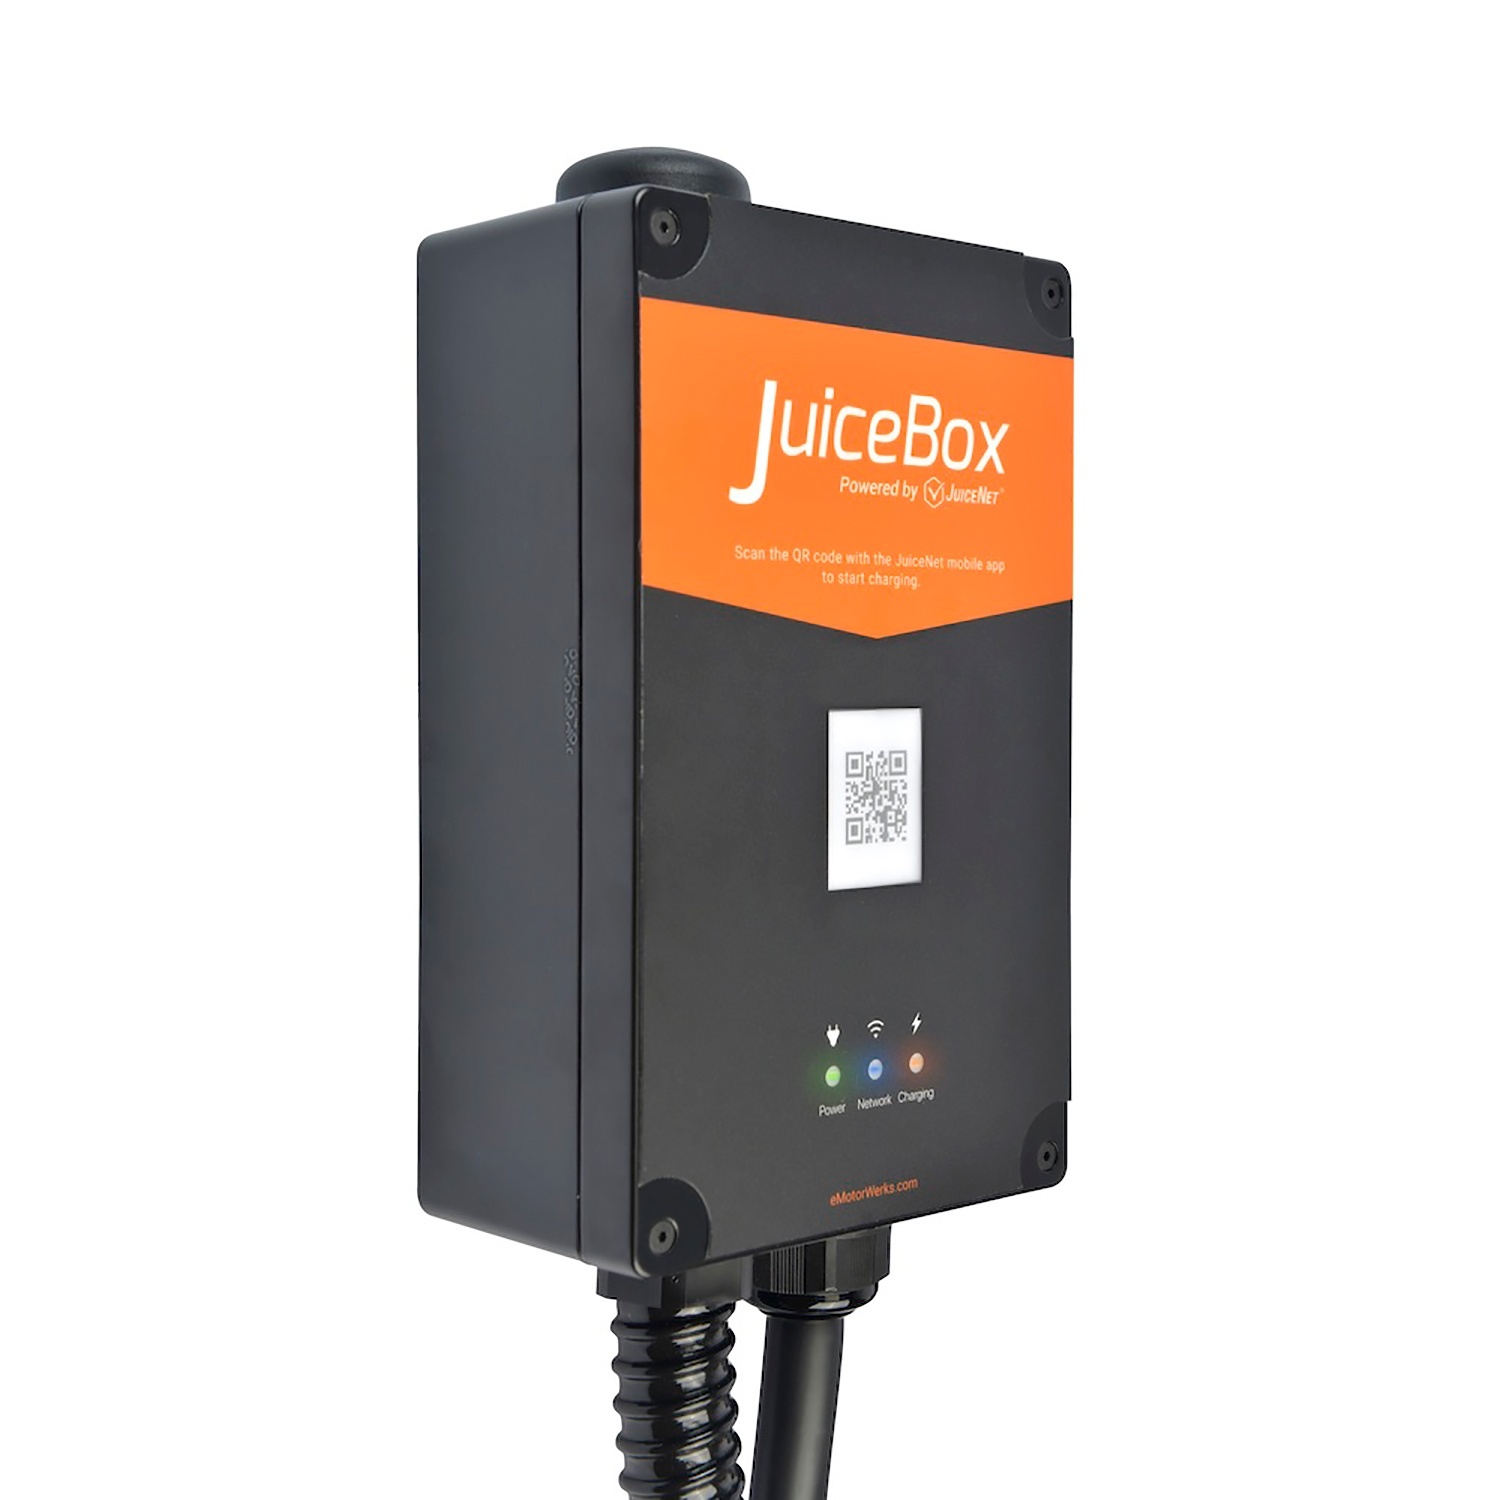 juicebox pro support